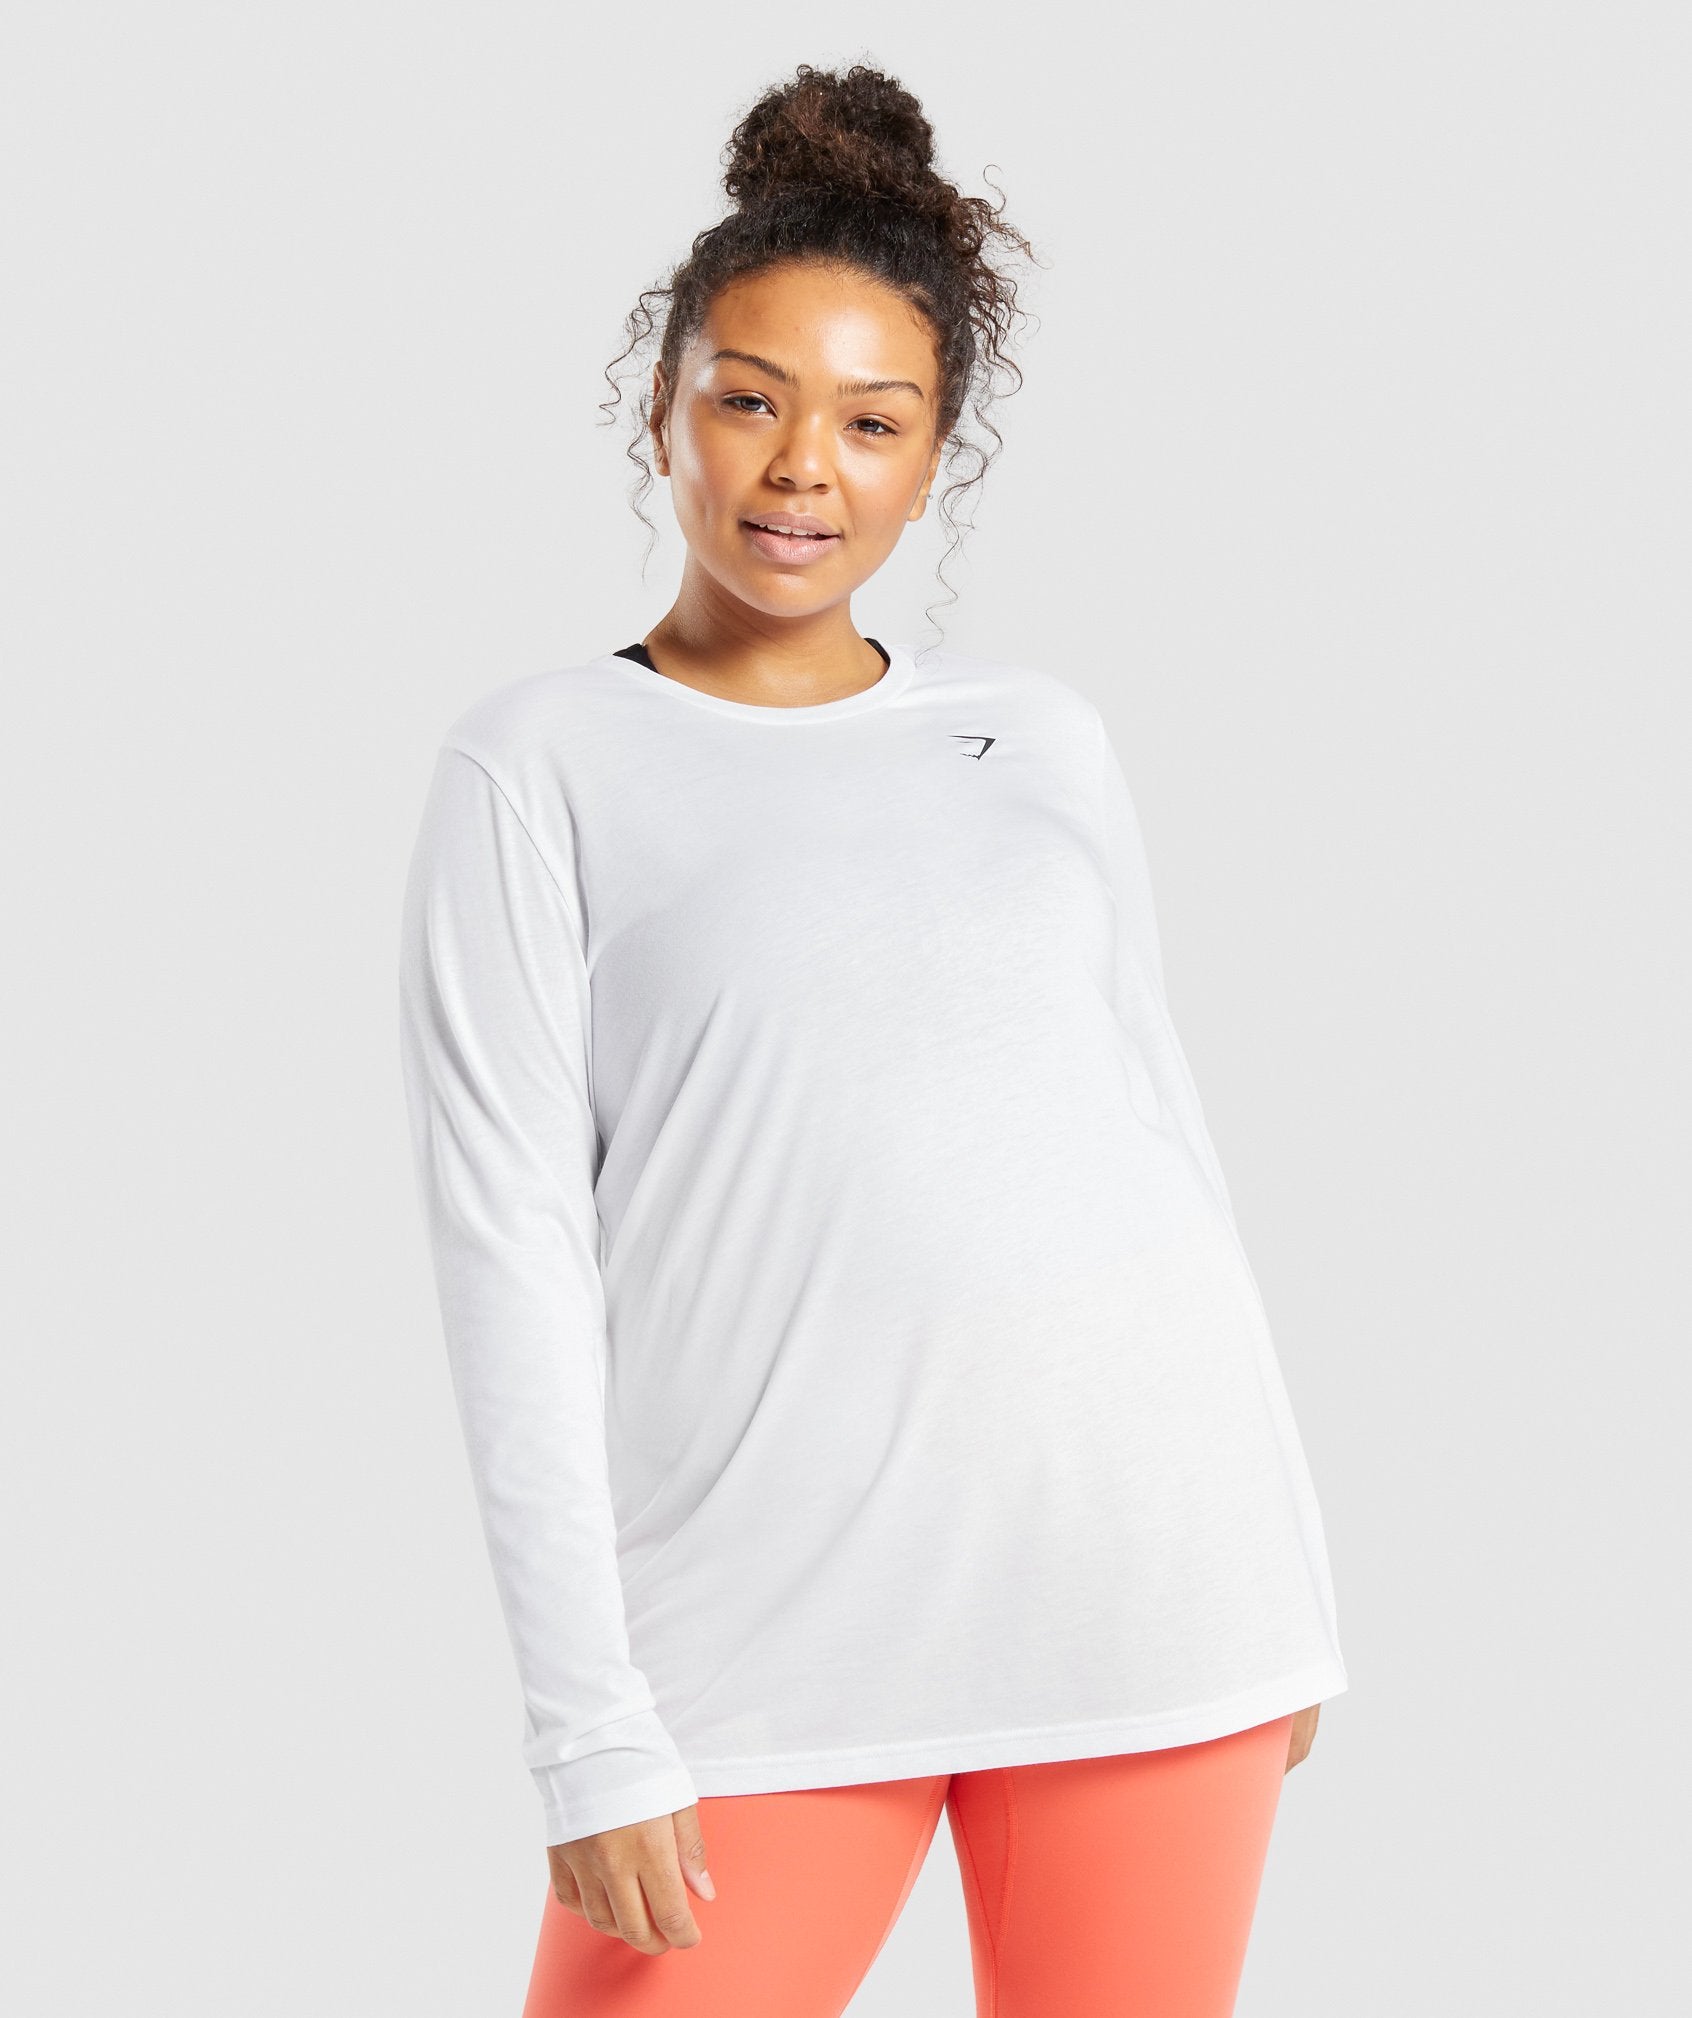 Women's Long Sleeve Gym & Workout Shirts - Gymshark